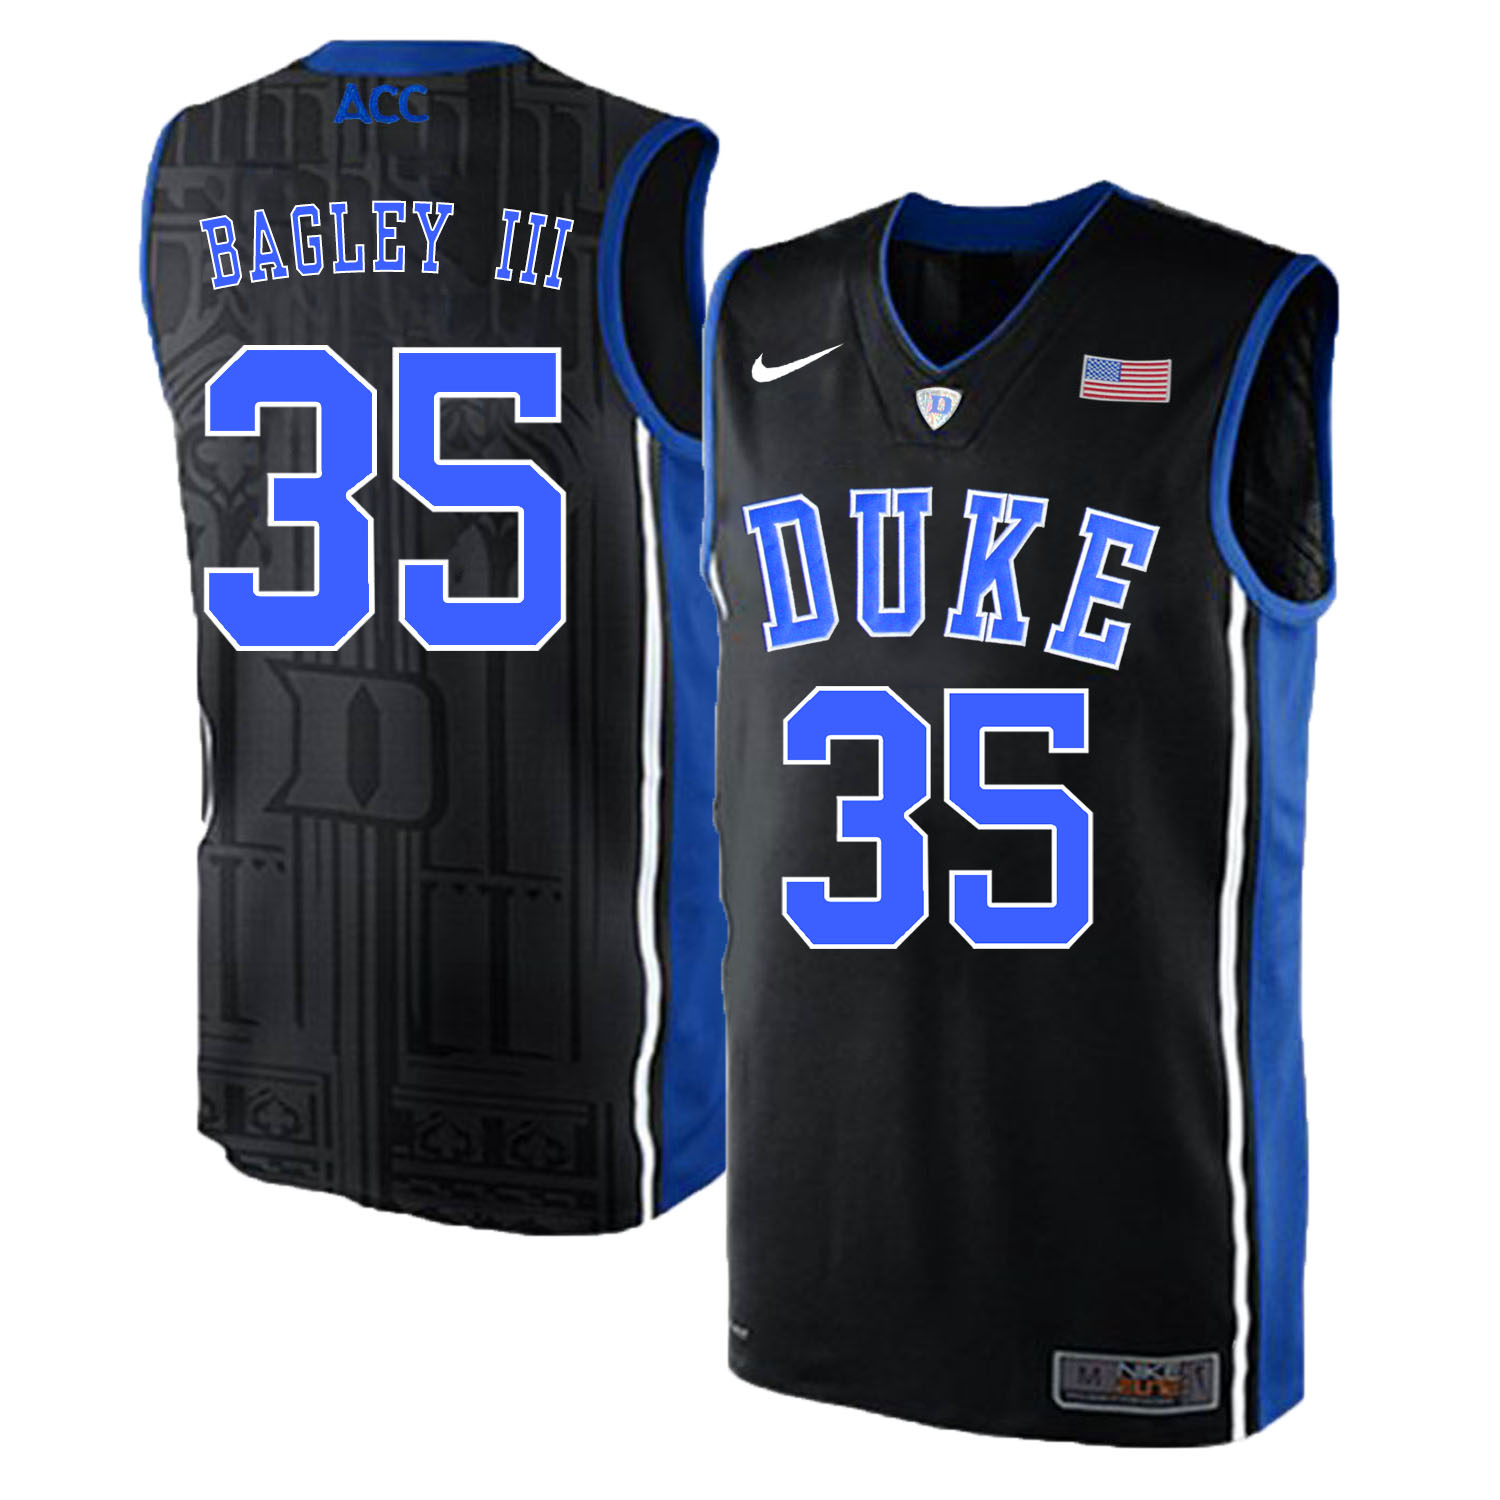 Duke Blue Devils 35 Marvin Bagley III Black Elite Nike College Basketball Jersey